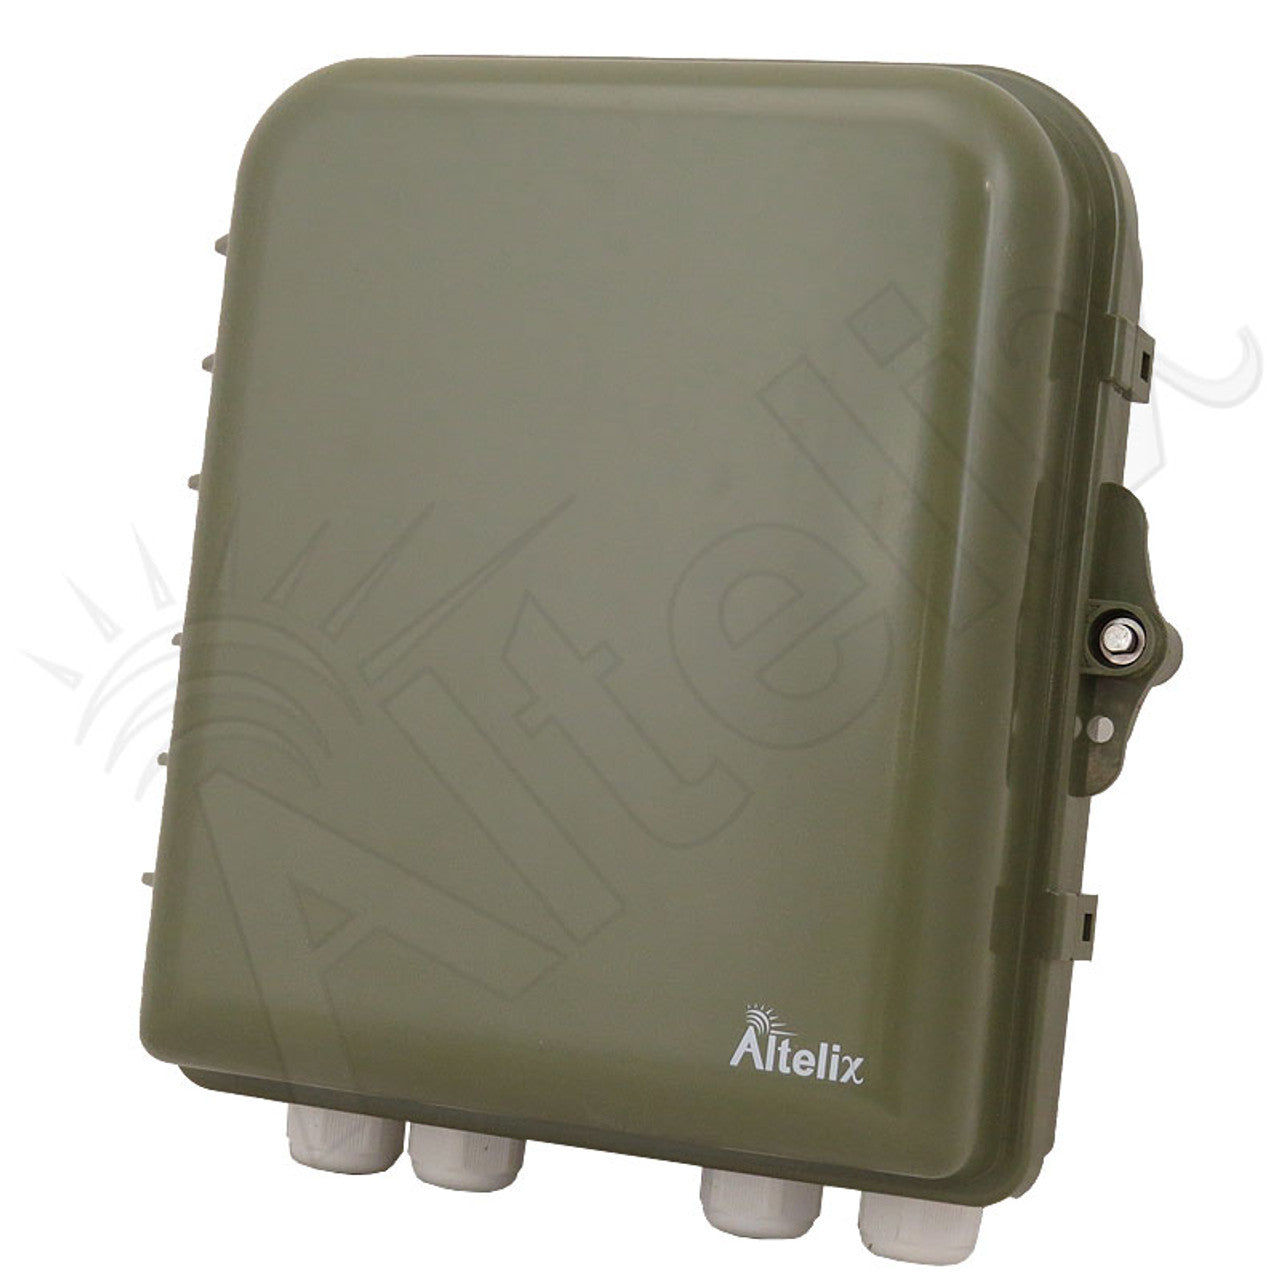 Buy green Altelix 10x9x4 IP66 NEMA 4X PC+ABS Weatherproof Utility Box with Hinged Door and Aluminum Mounting Plate